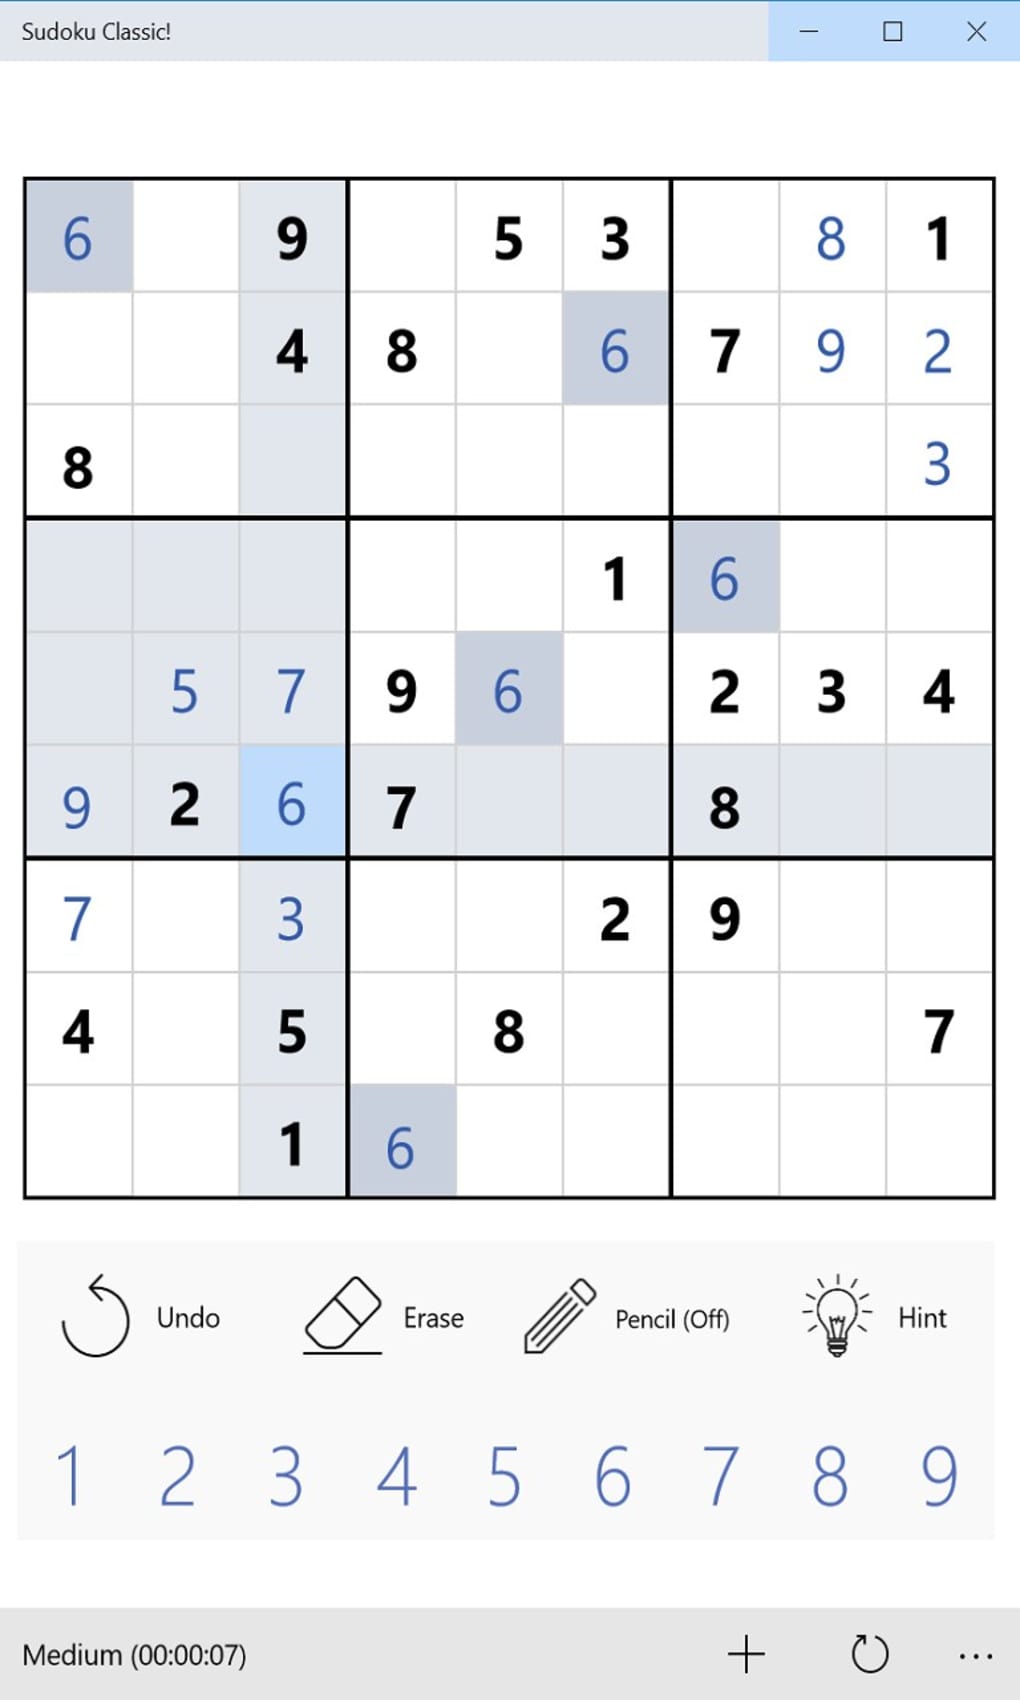 Sudoku Classic, Software